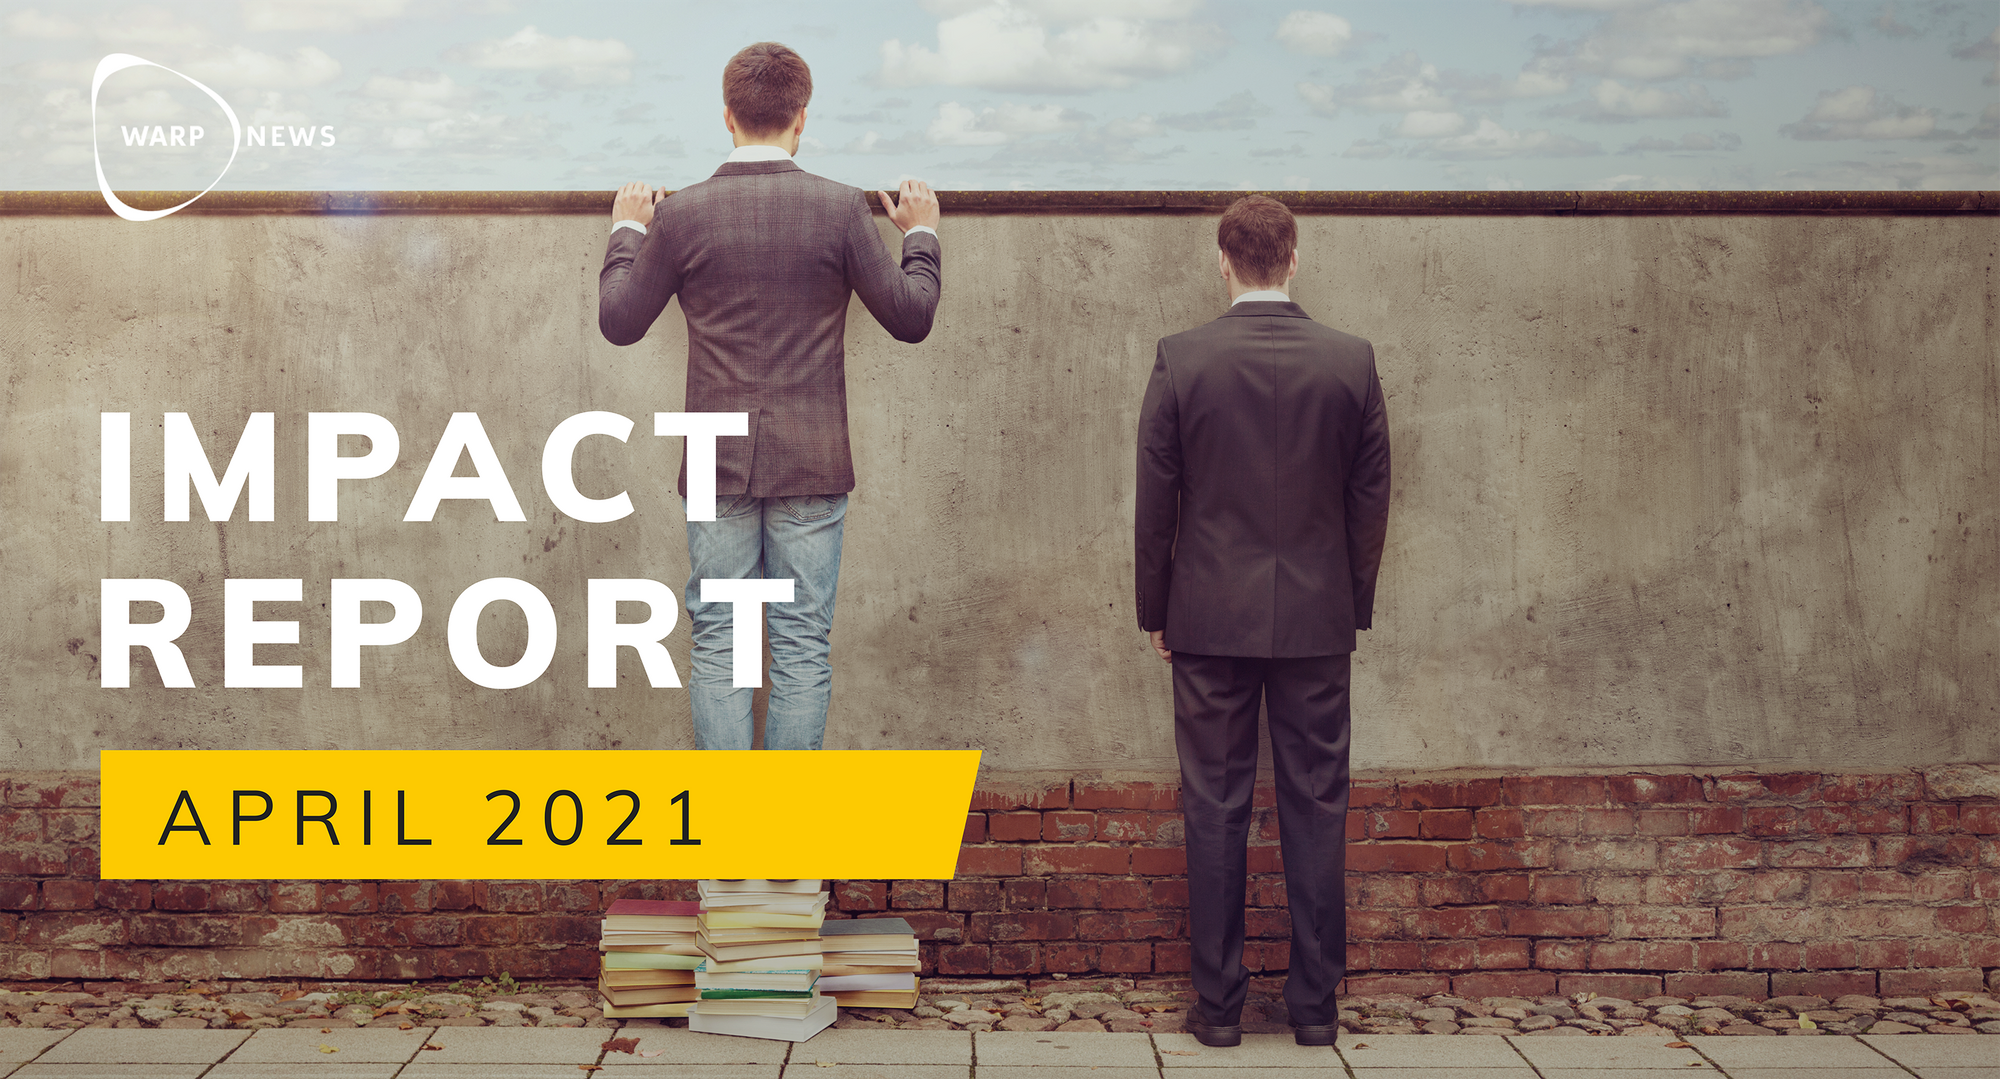 📝 Warp News Impact Report - April 2021